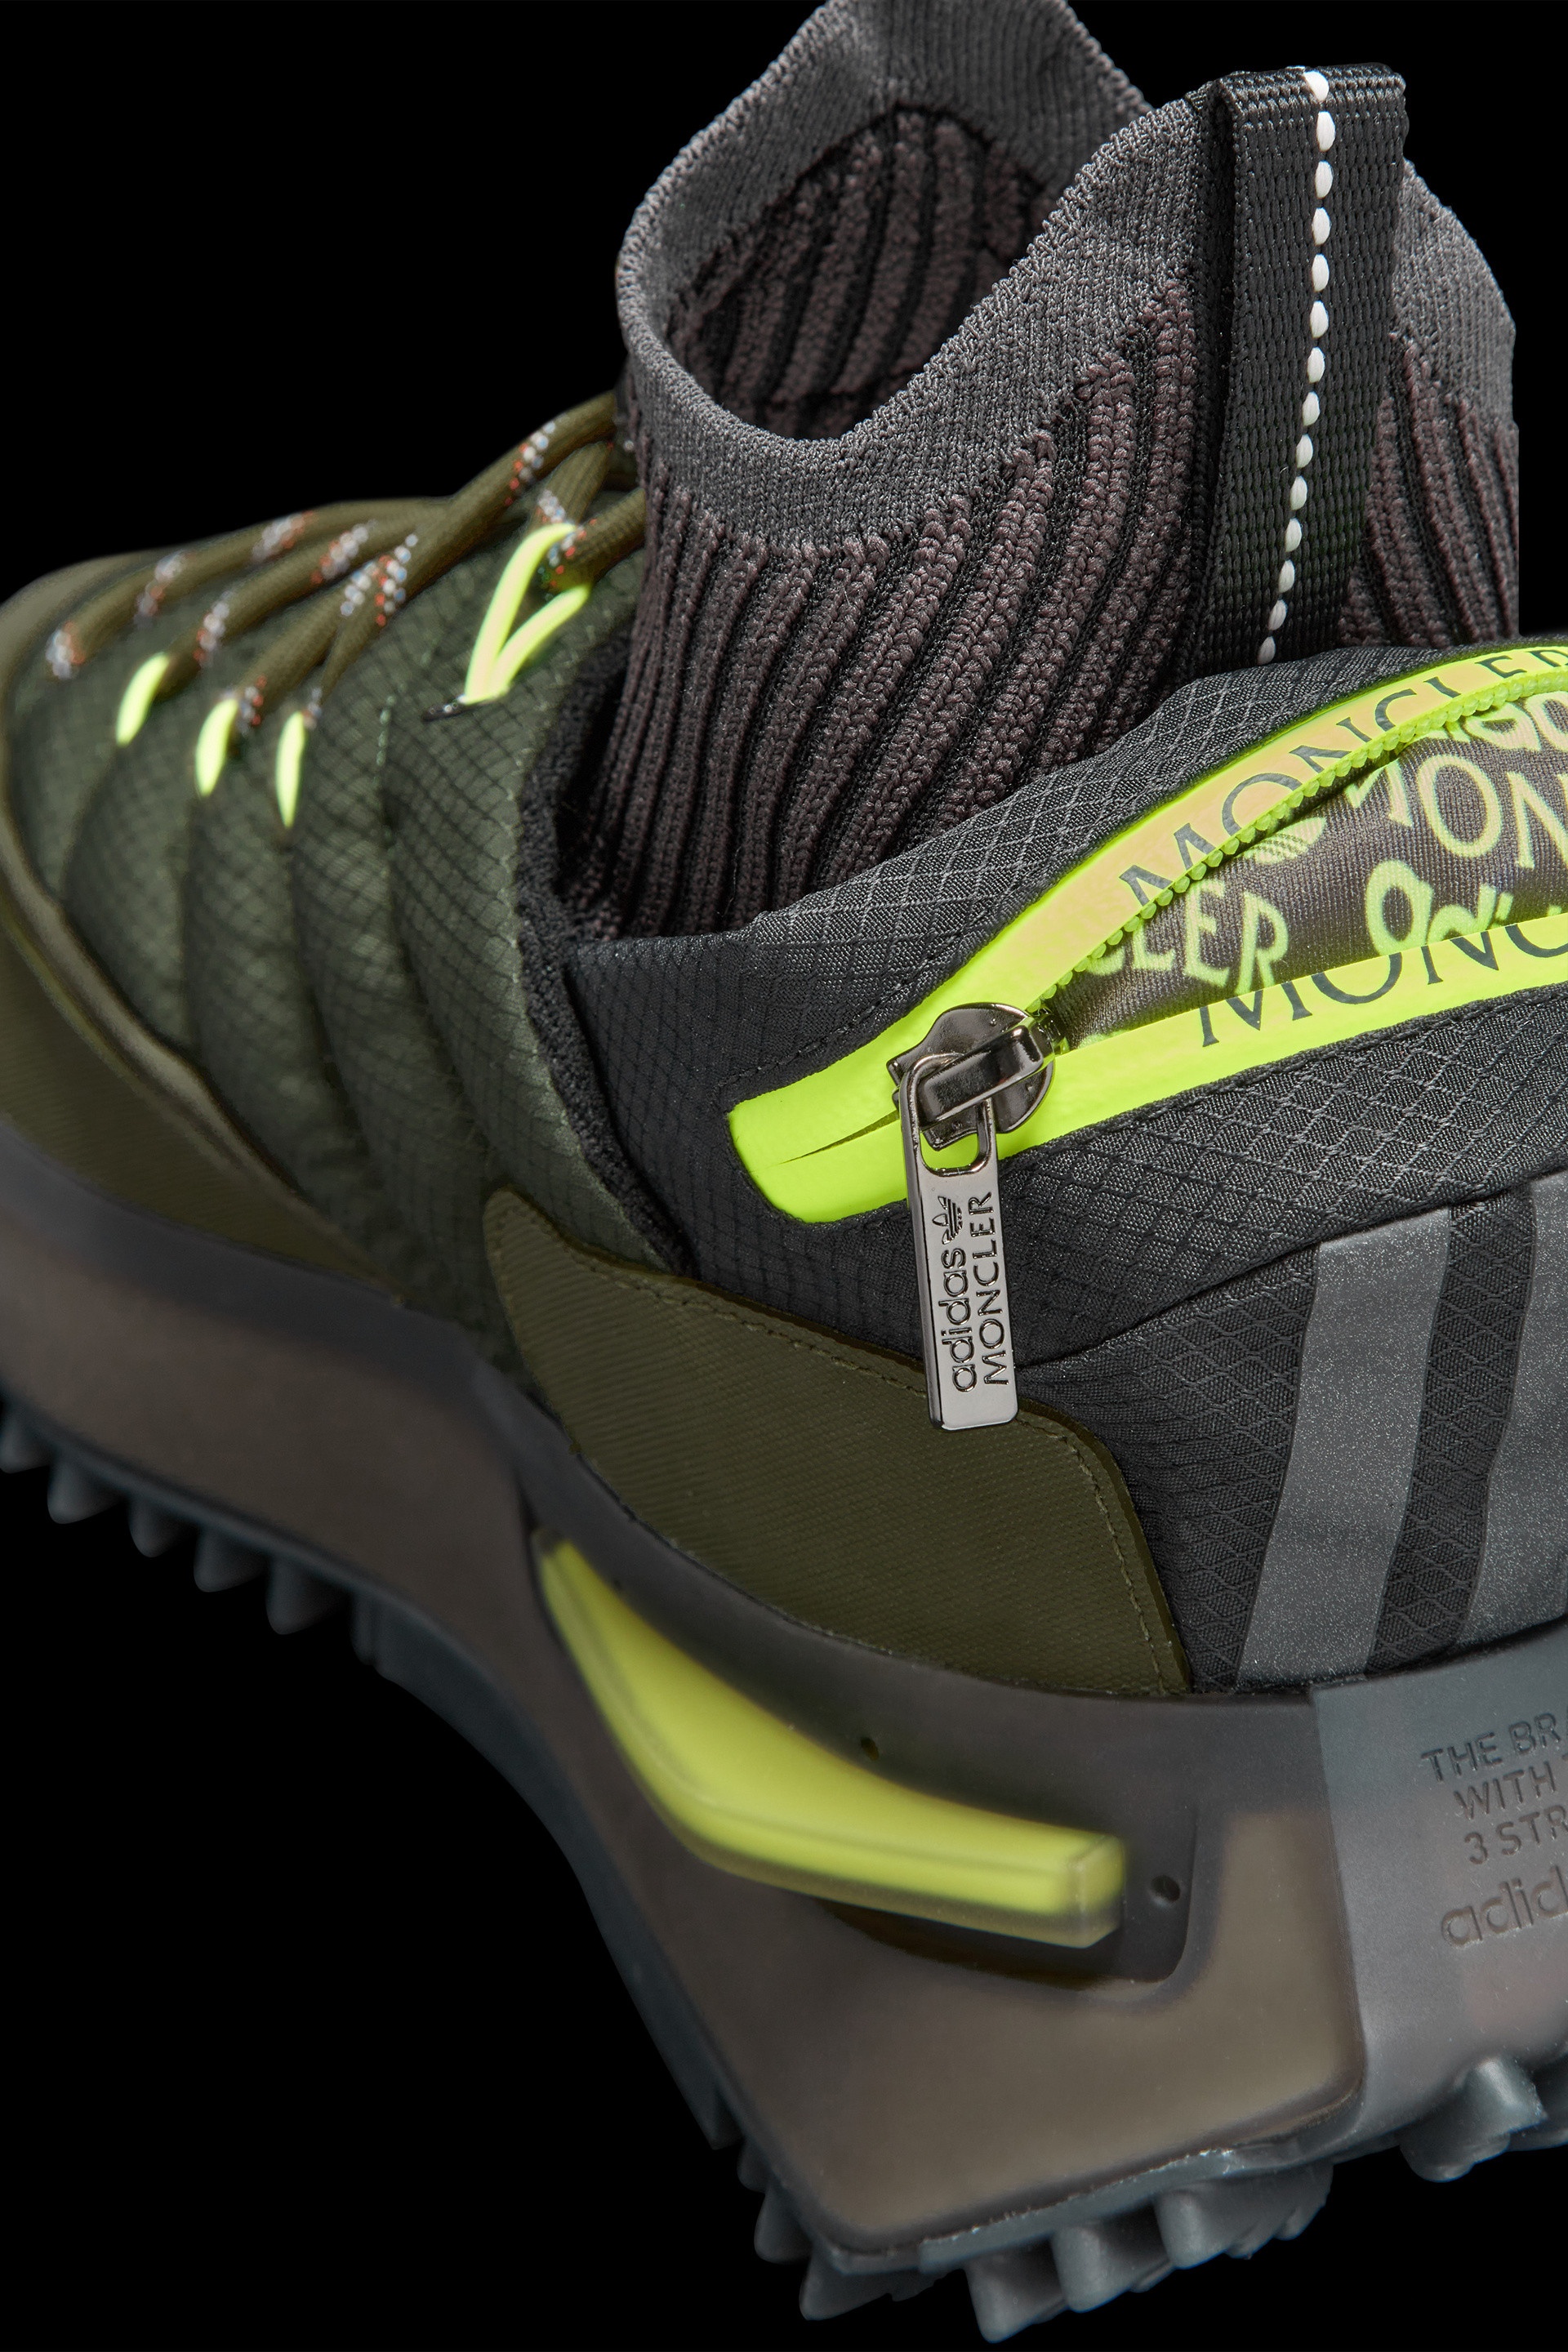 Moncler NMD Runner Sneakers - 5